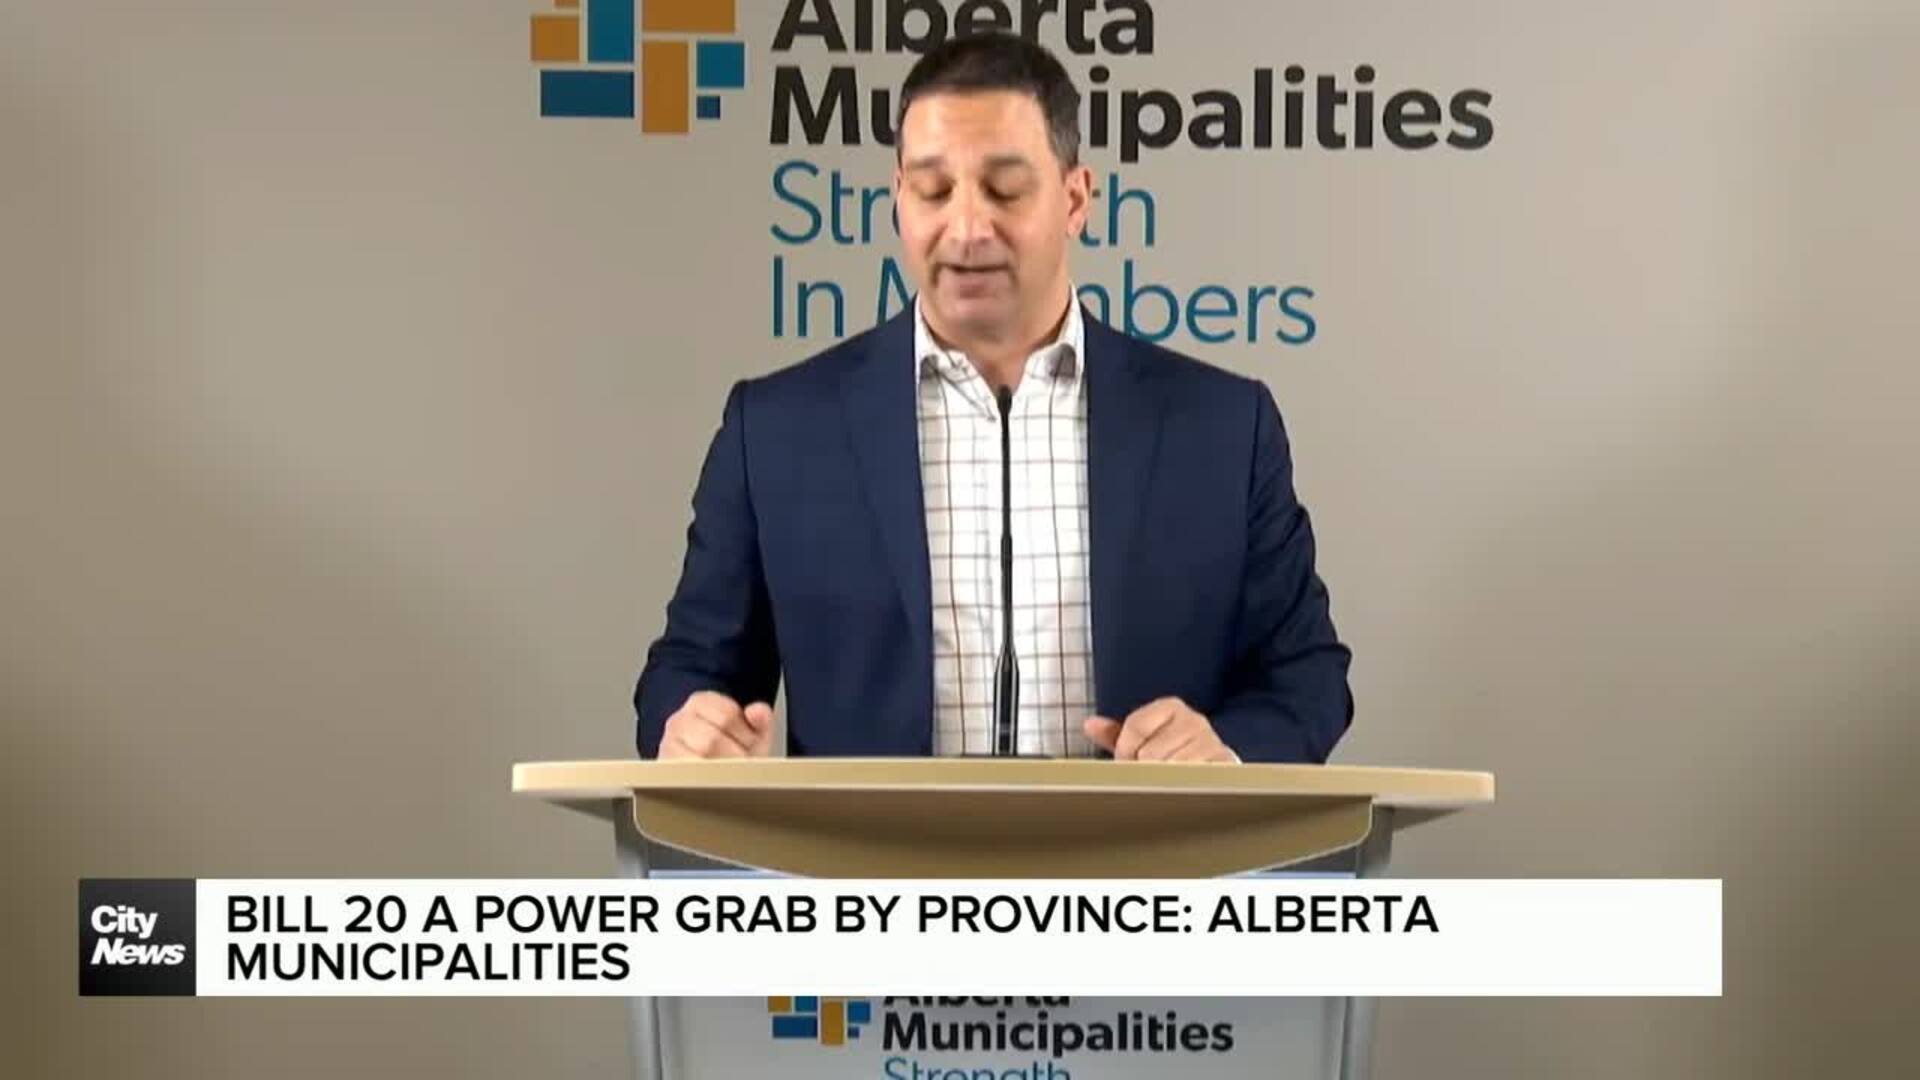 Bill 20 a power grab by province: Alberta Municipalities